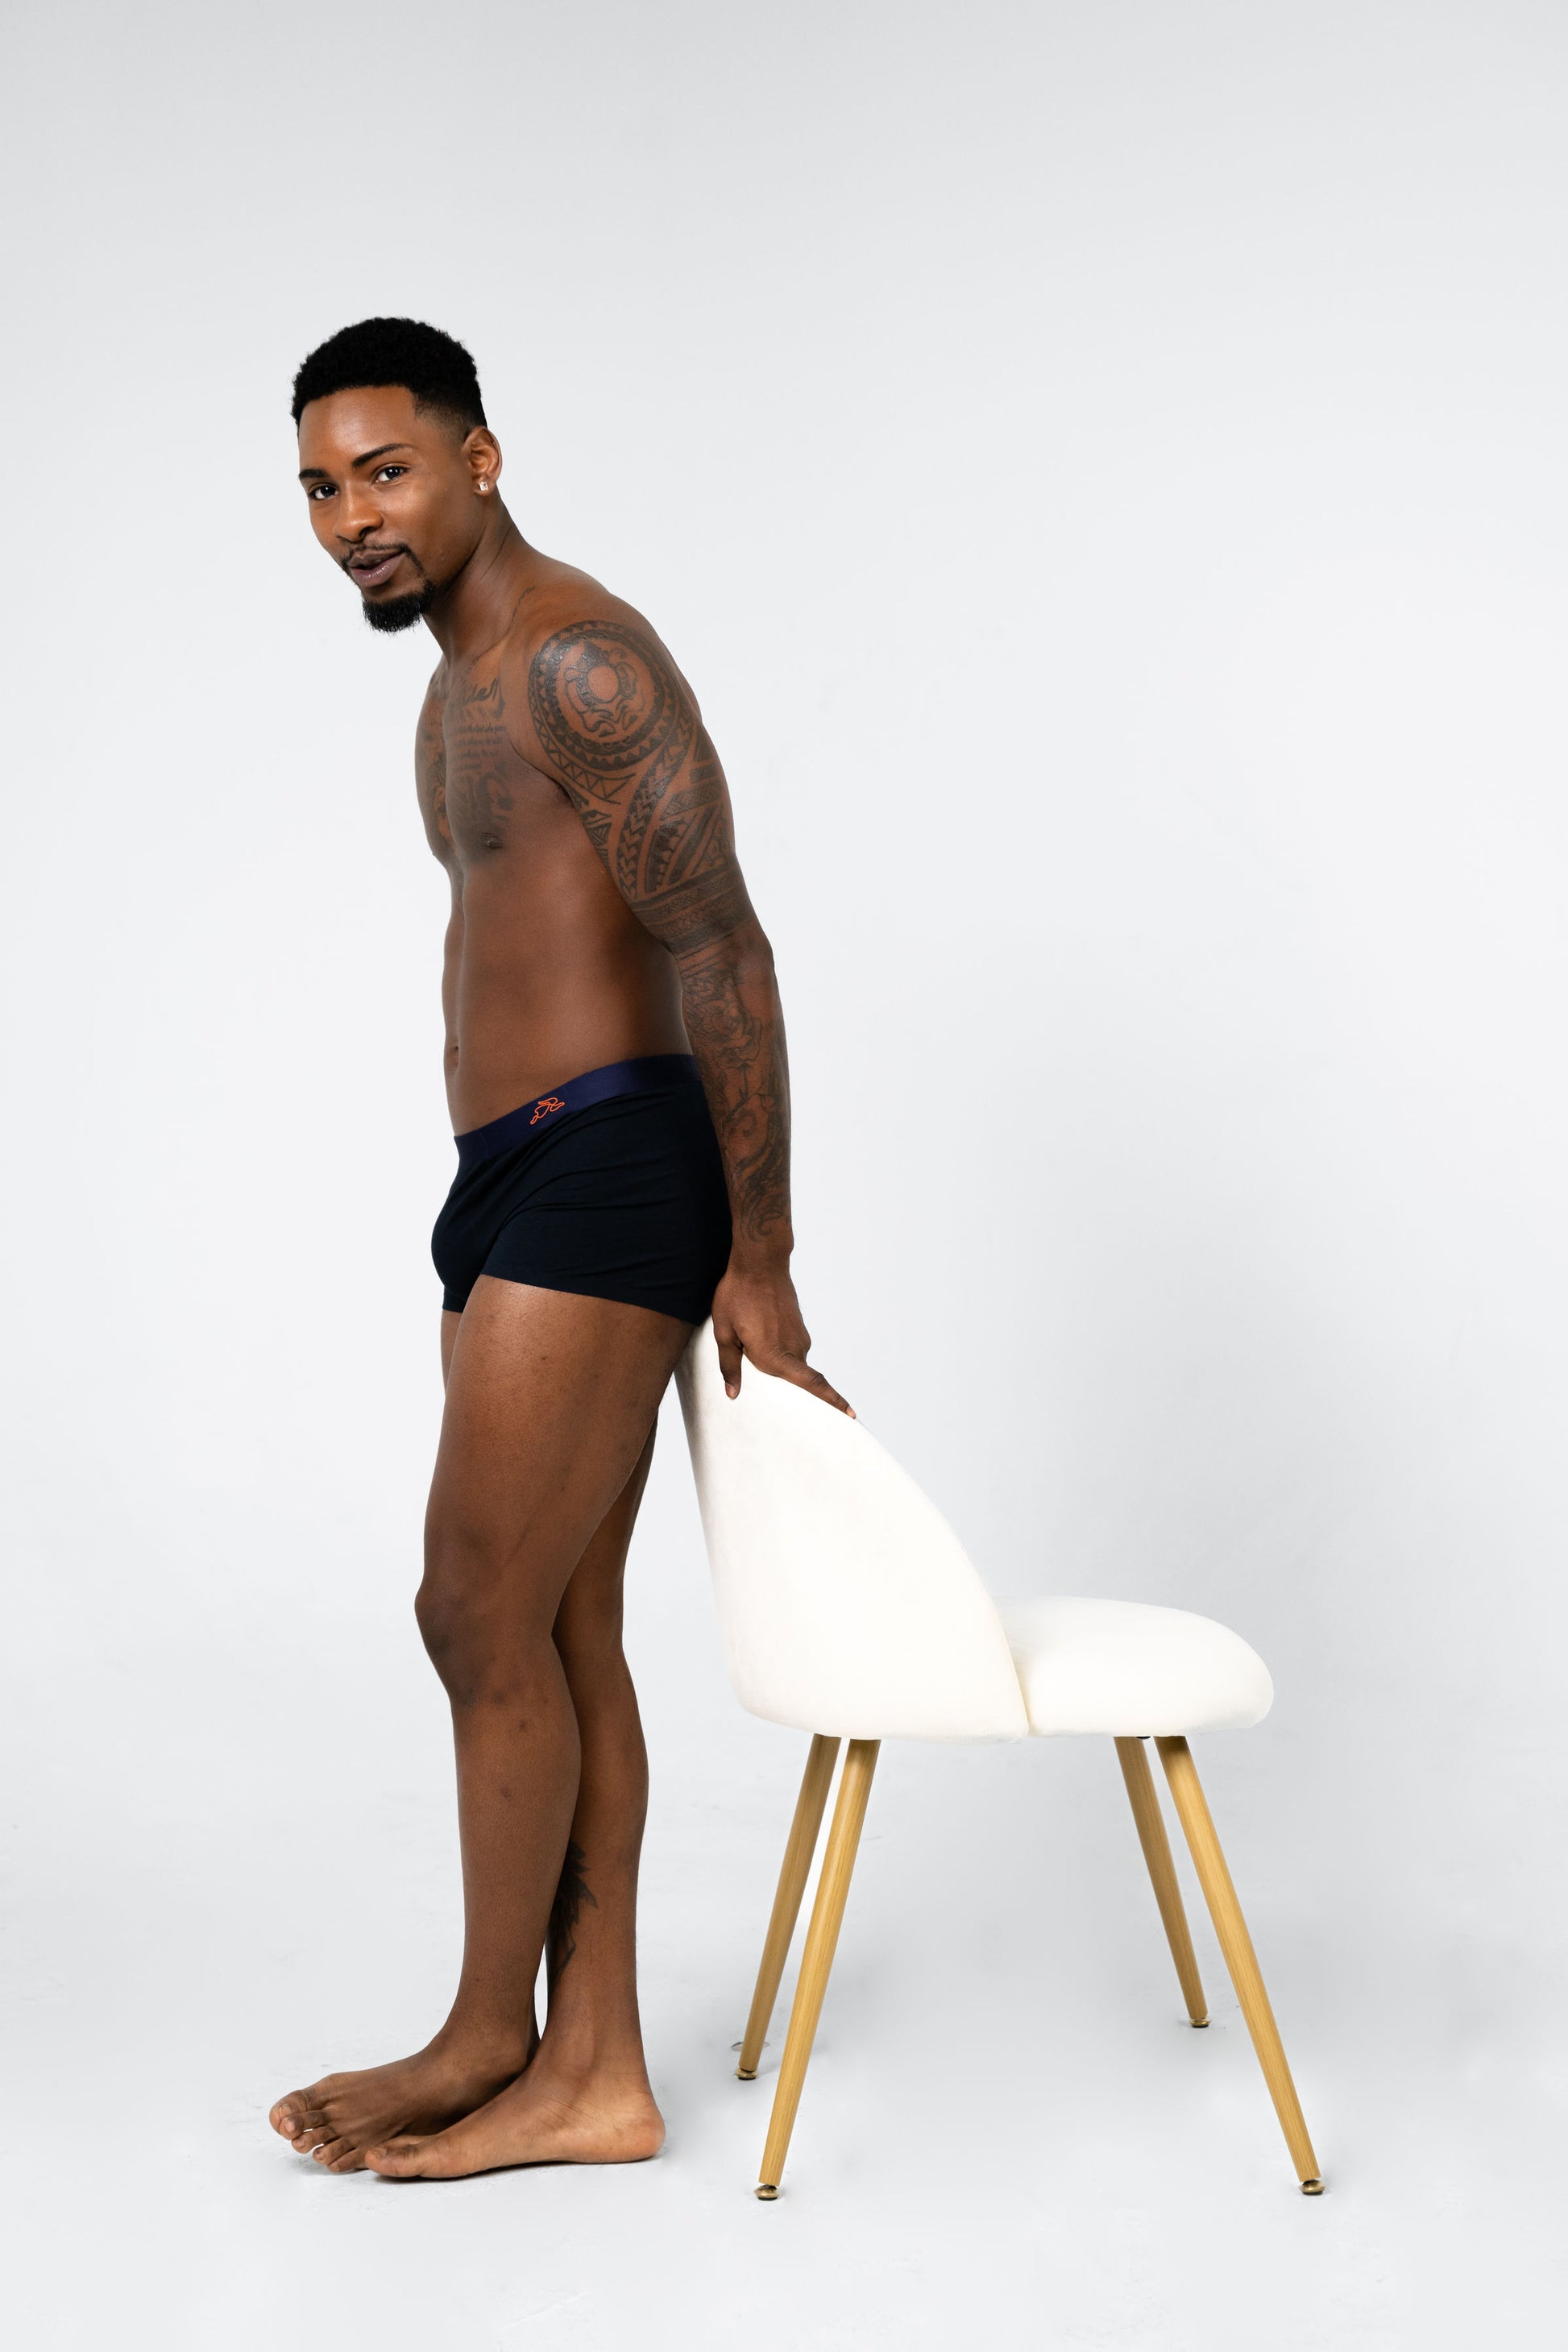 Mens Spandex Shorts | Mens Shorts with Spandex Underneath | ORCOMAT